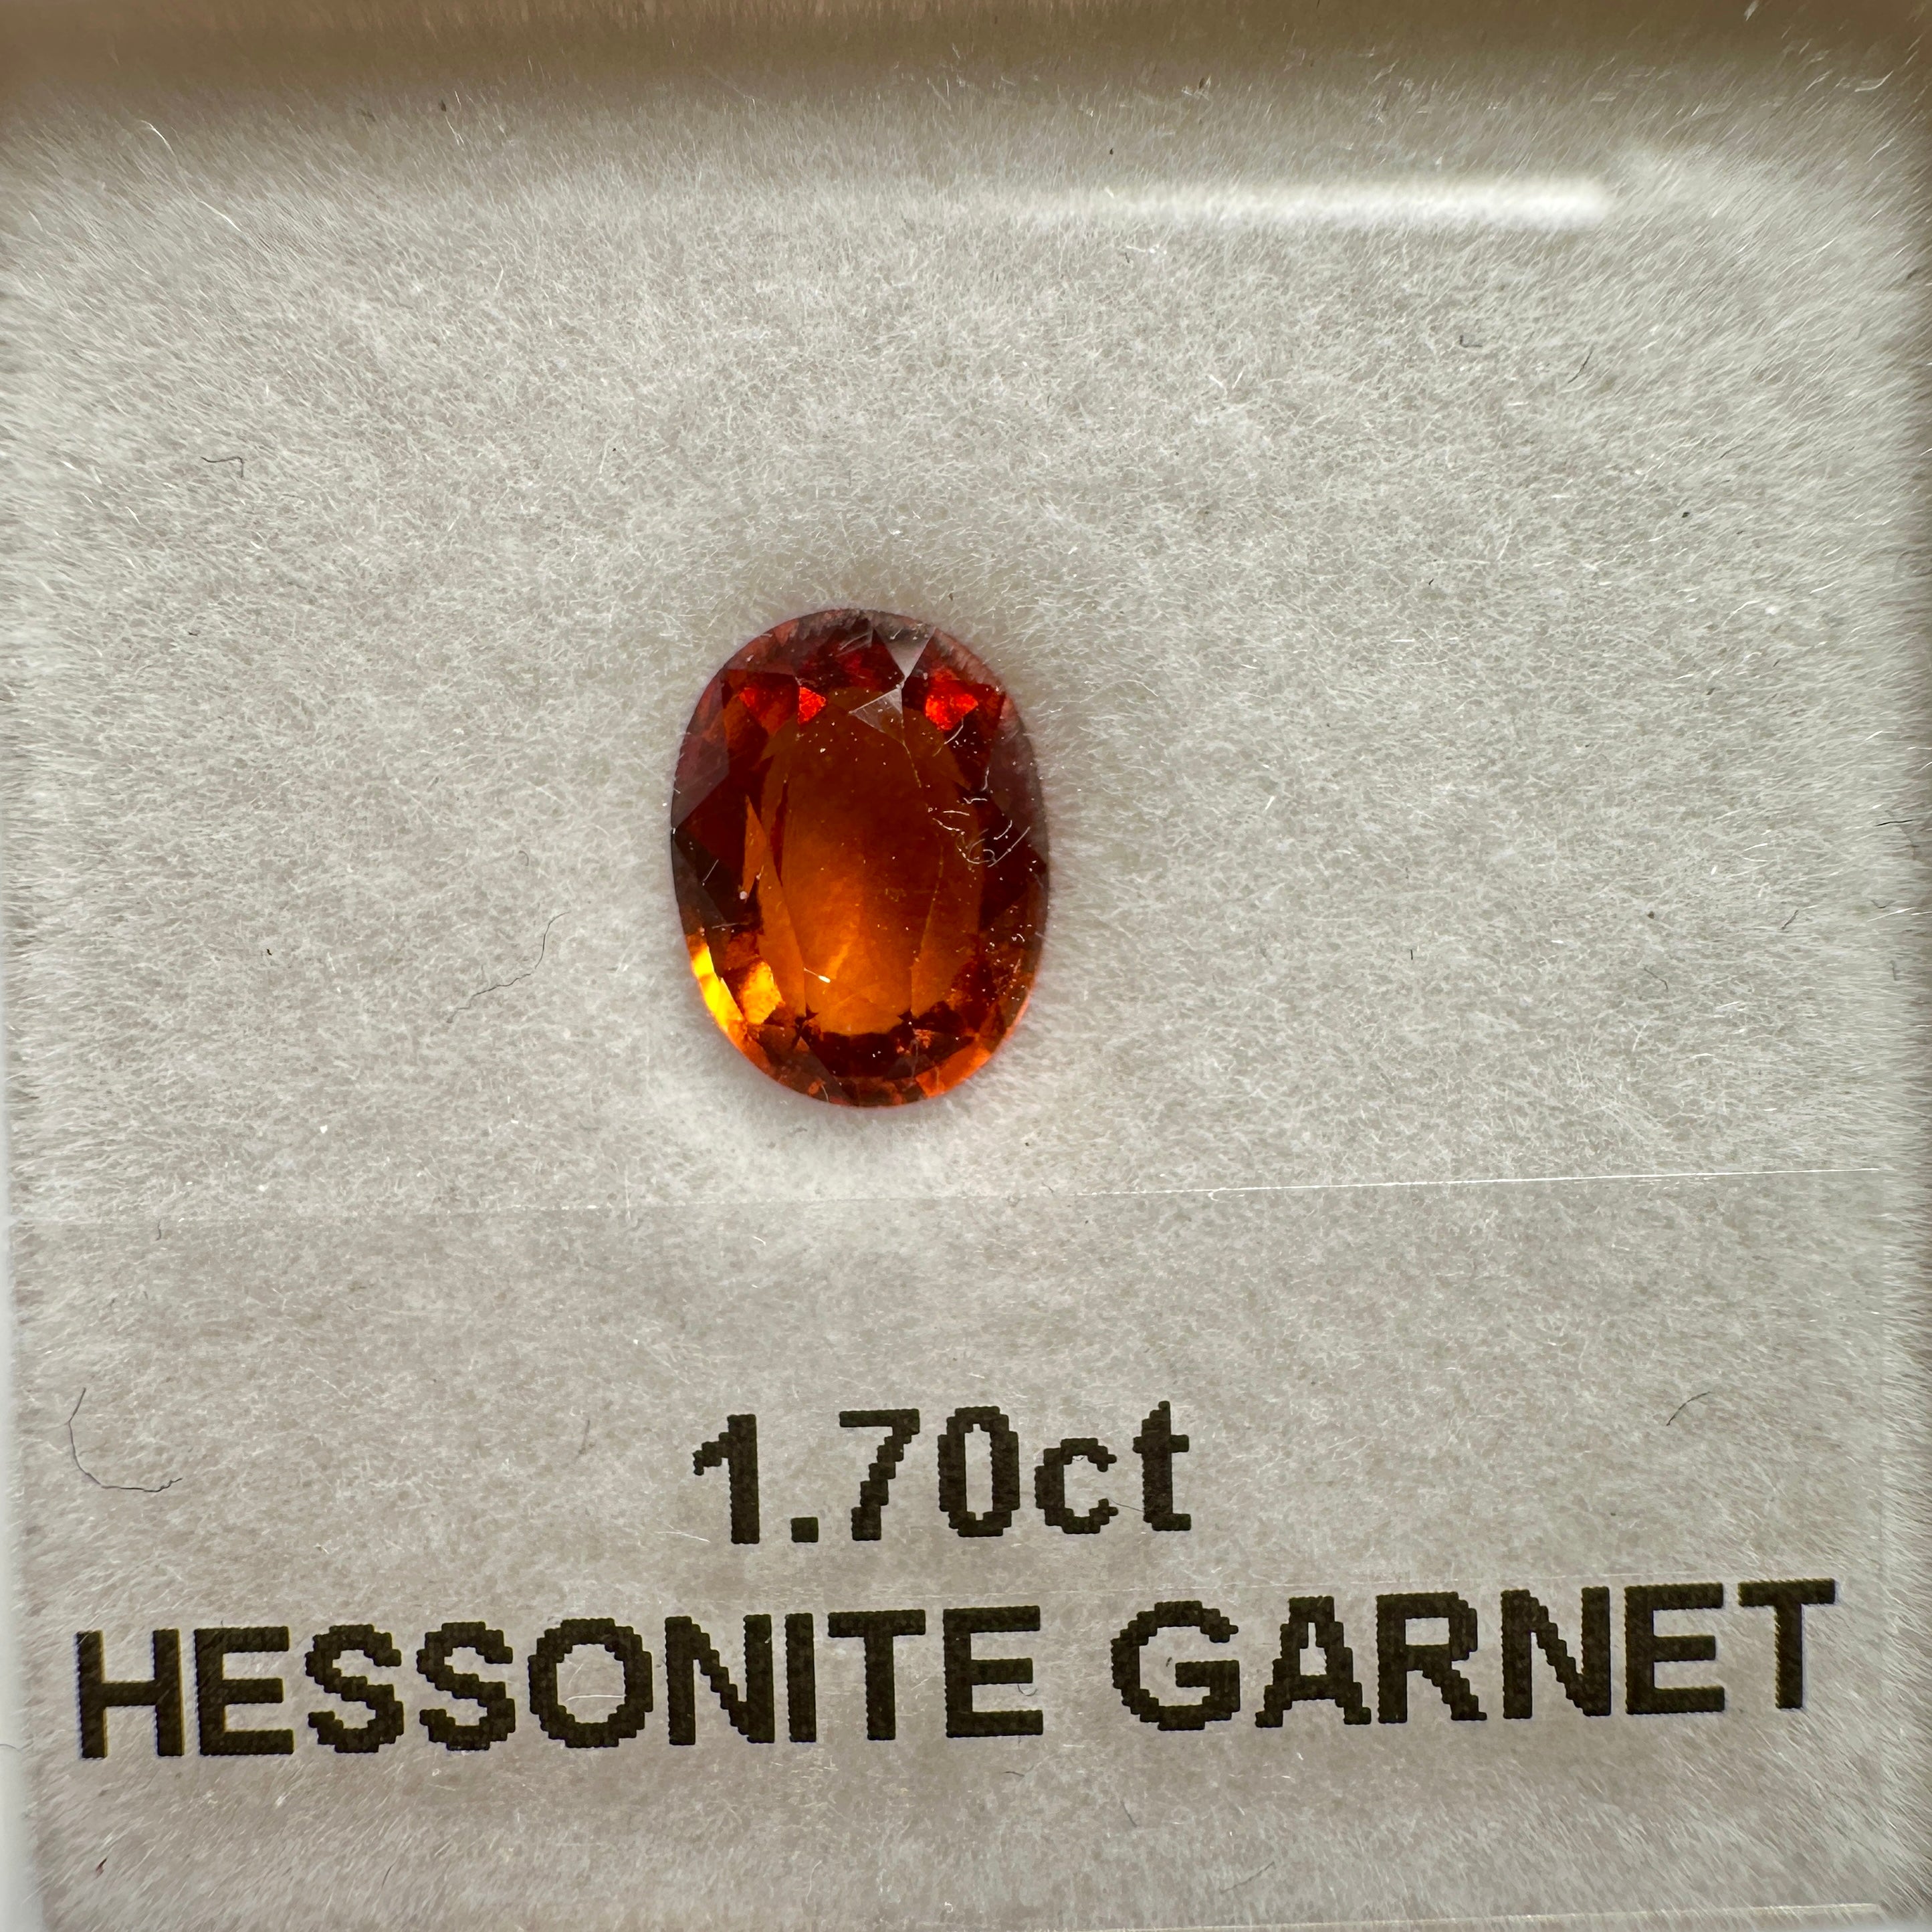 1.70ct Hessonite Garnet, Untreated Unheated, native cut